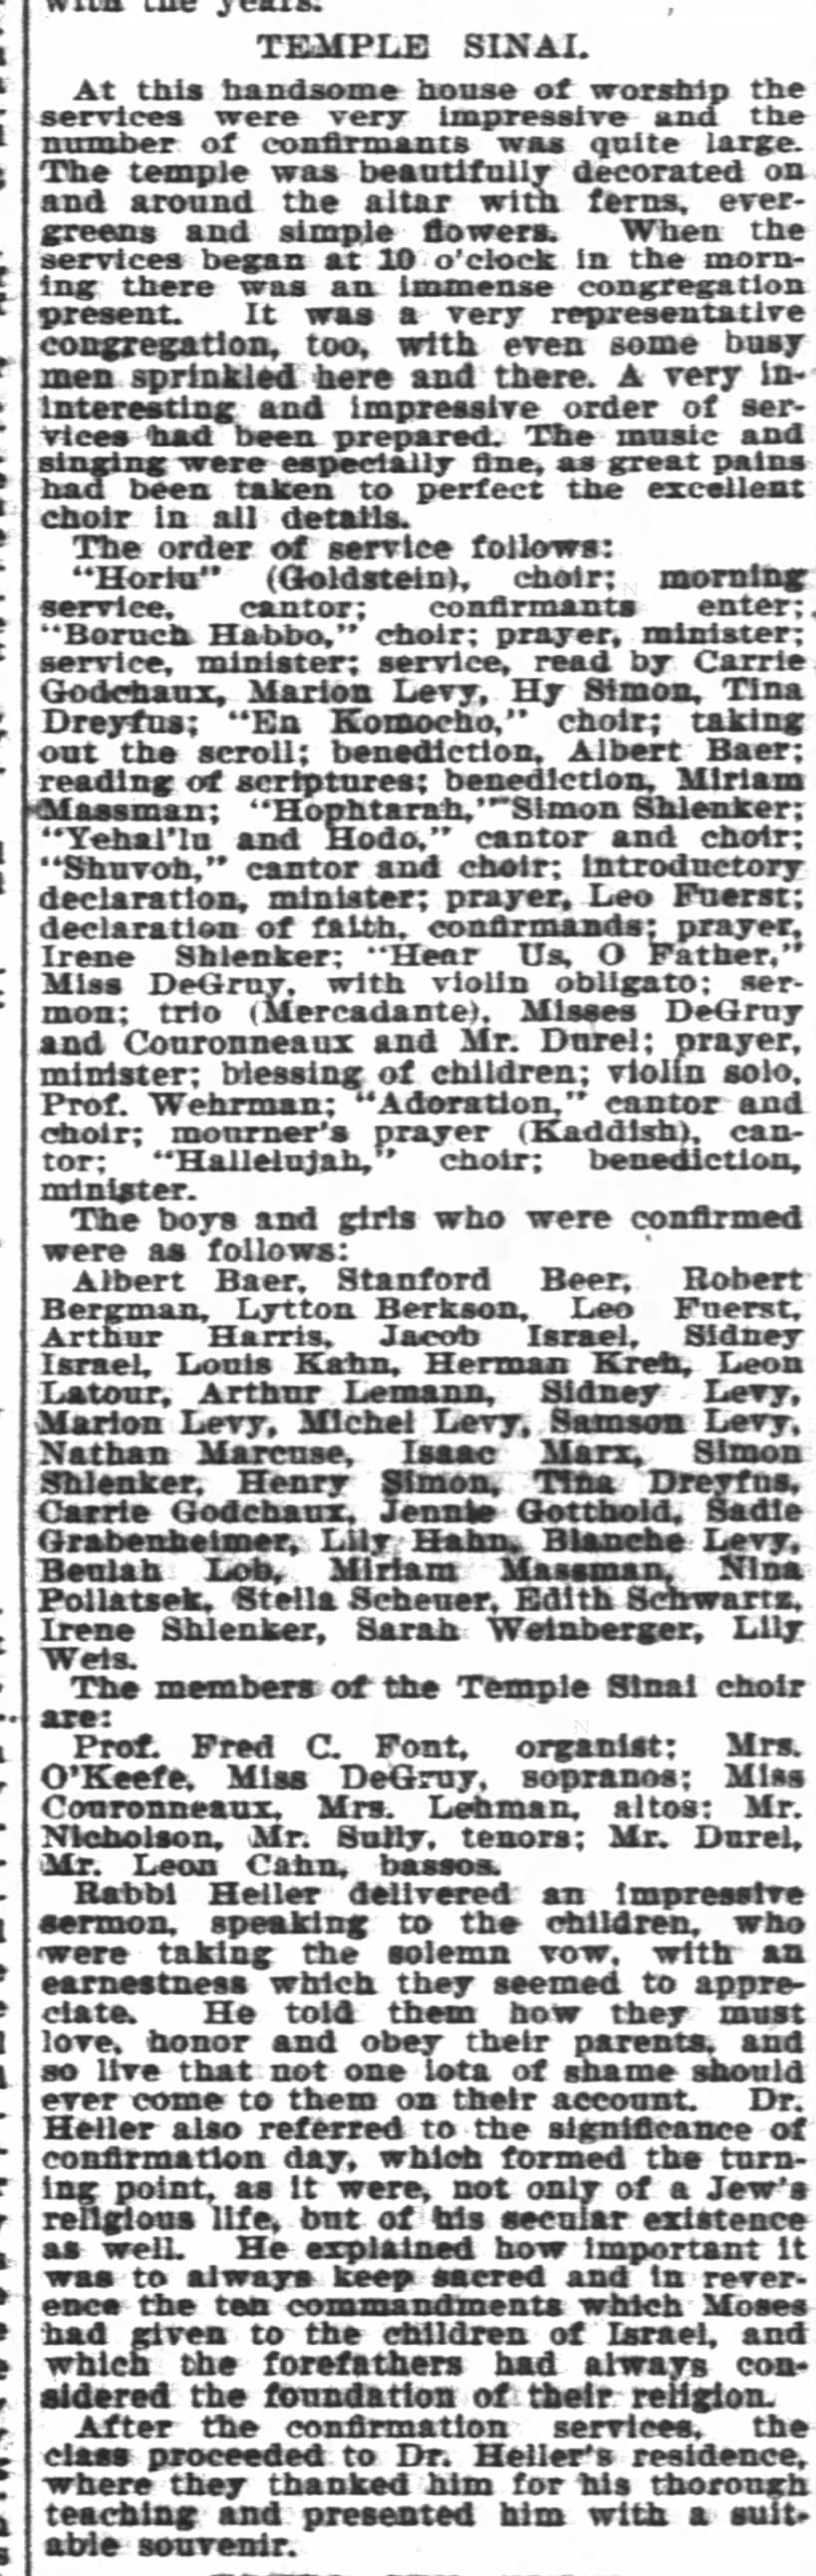 Lytton M. Berkson's Confirmation at Temple Sinai 1899  May 16th